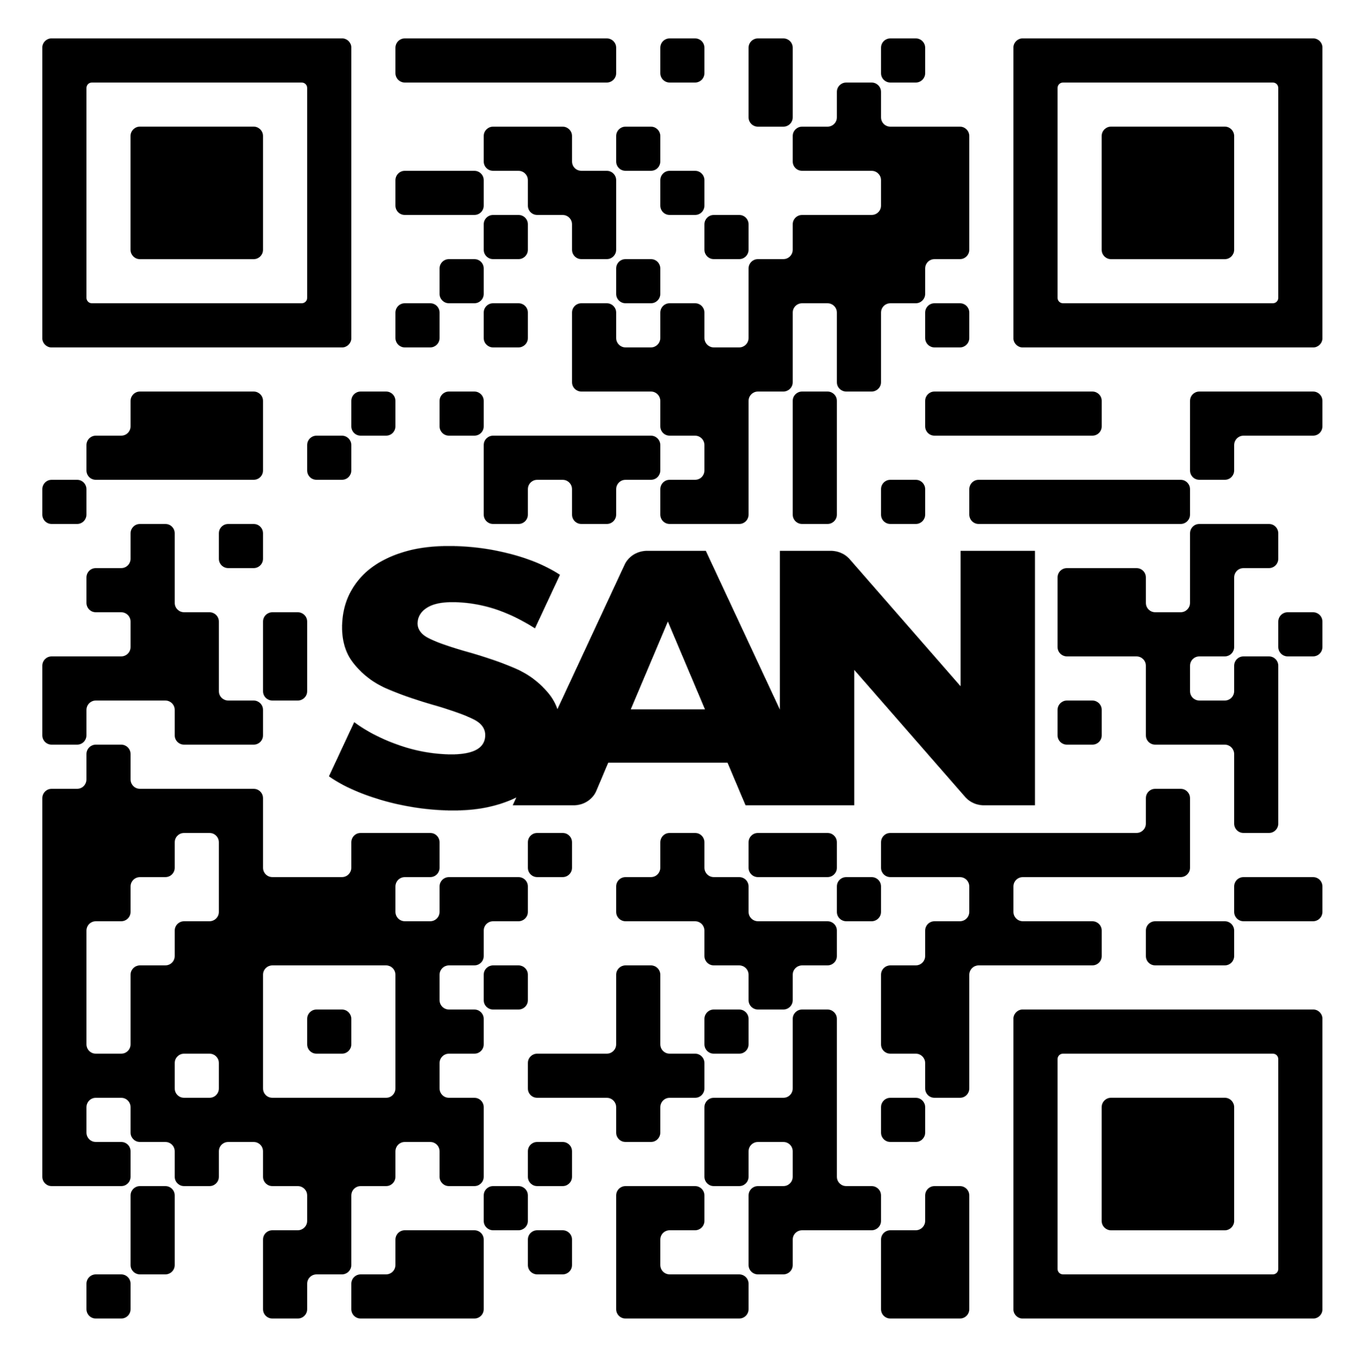 QR code for SAN app download